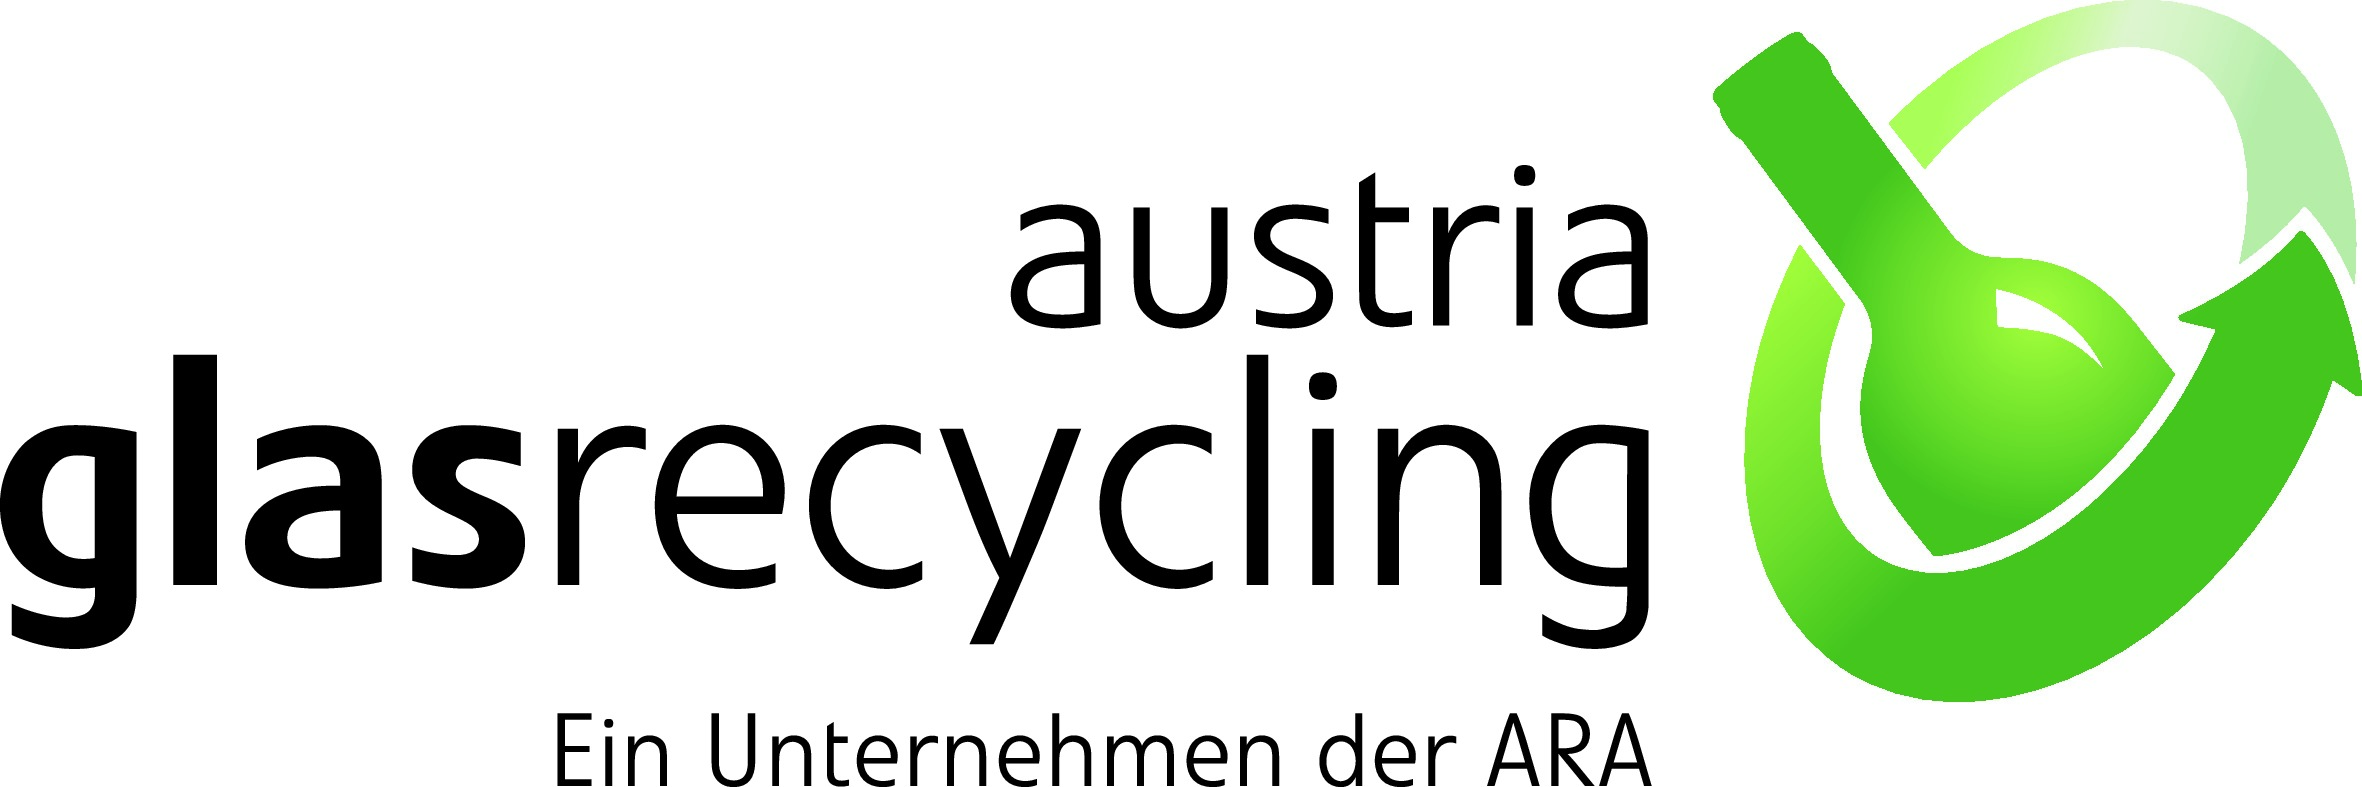 AustriaGlasRecyclingARA_Logo_100mm_cmyk.eps